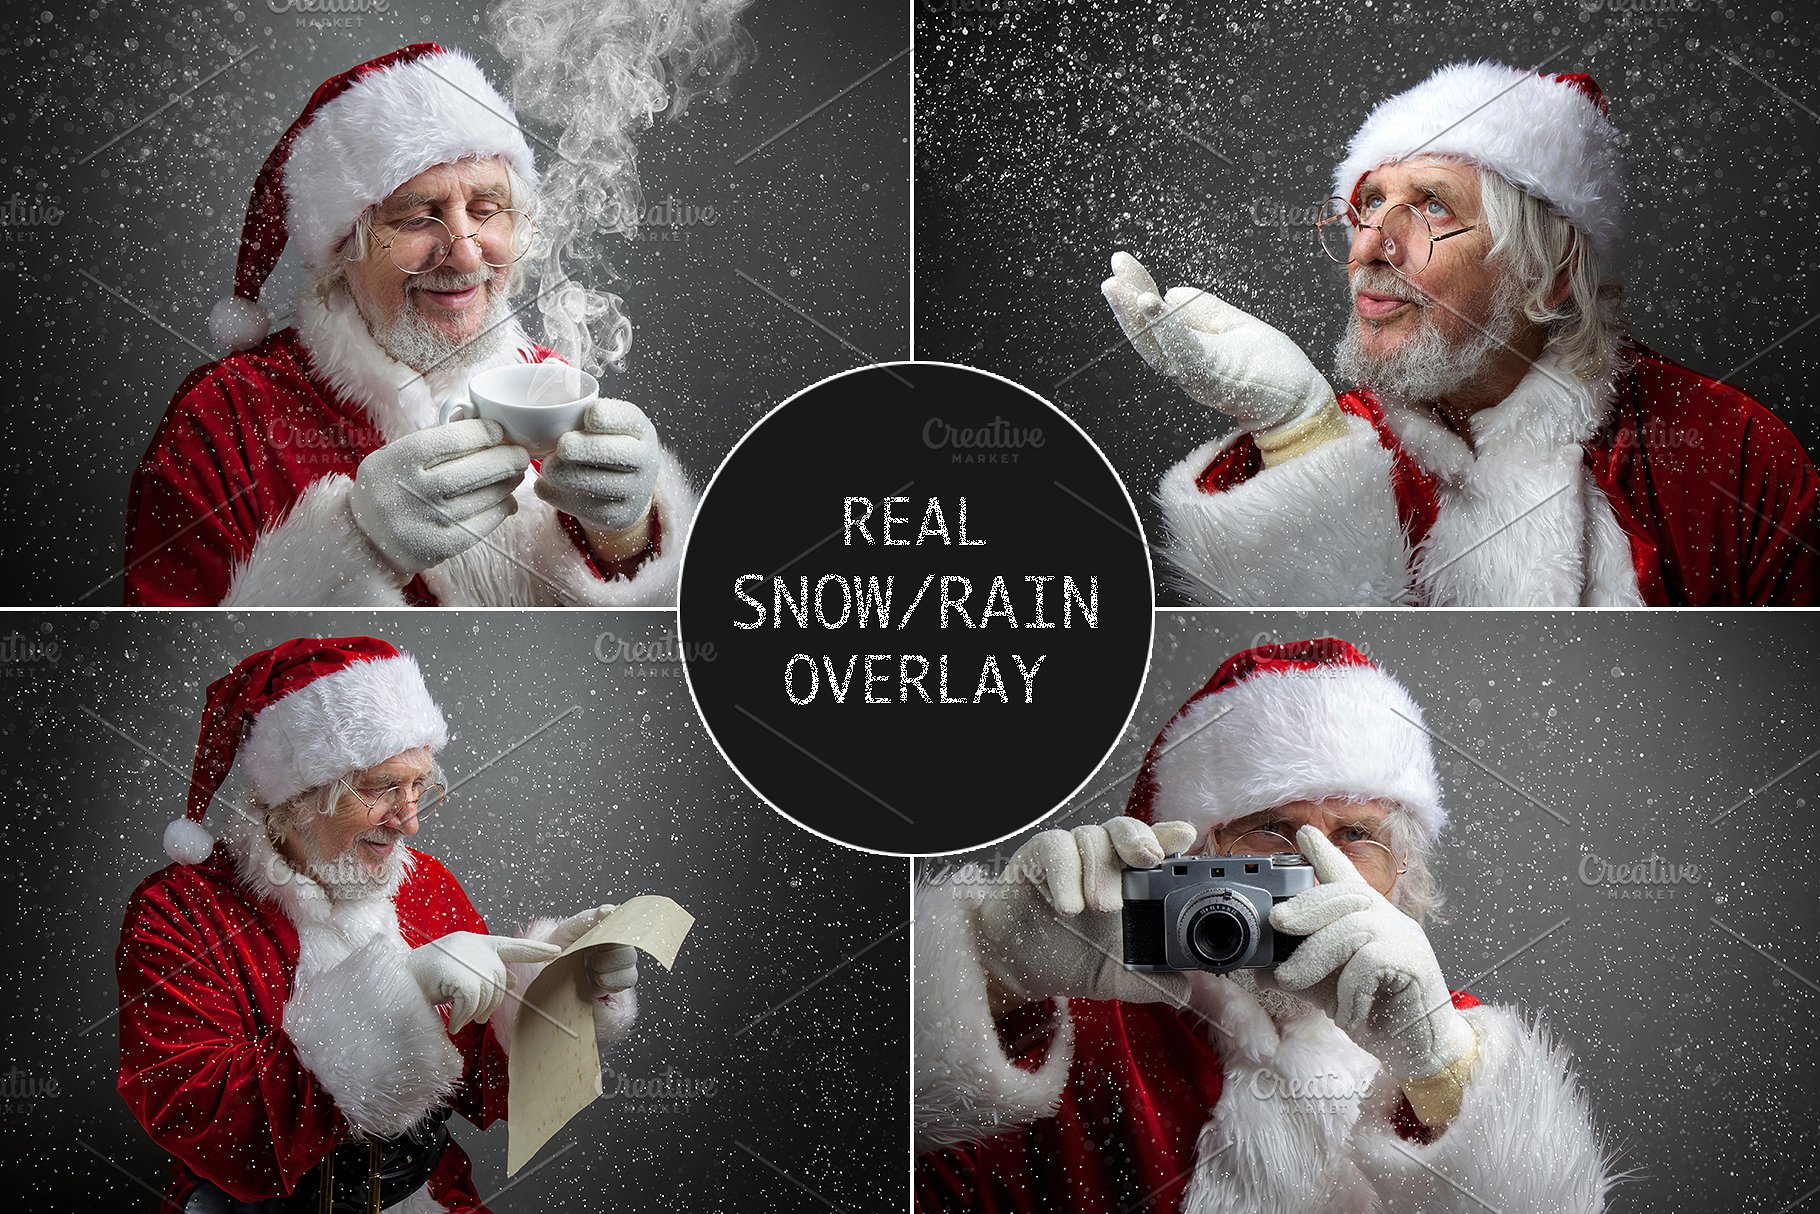 逼真飘雪雪景叠层背景 Real Snow-Rain overlays collection插图(1)